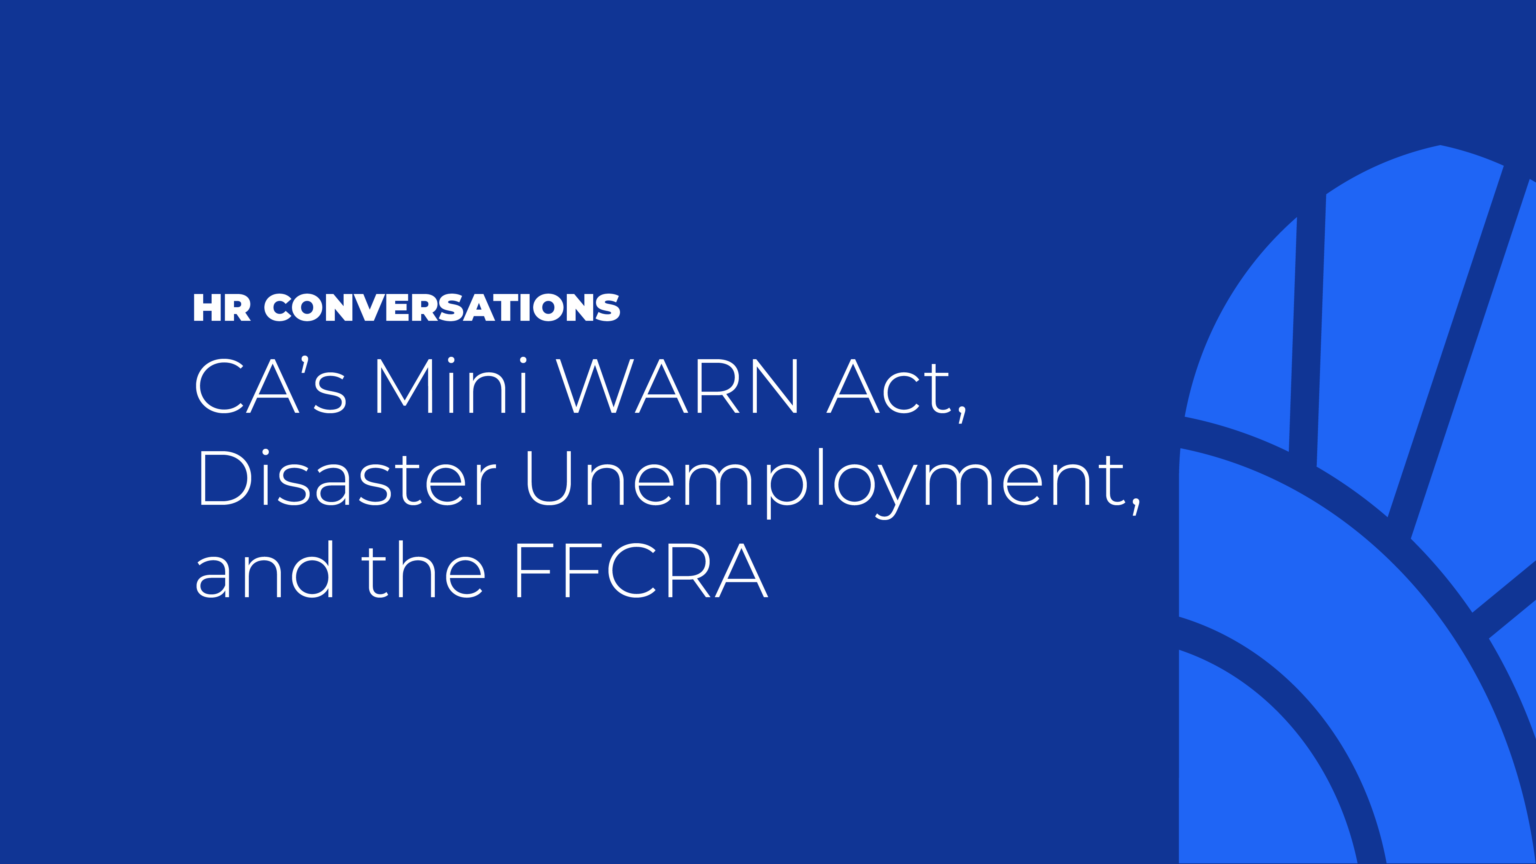 HR Conversations CA Mini Warn Act, Disaster Unemployment, and FFCRA